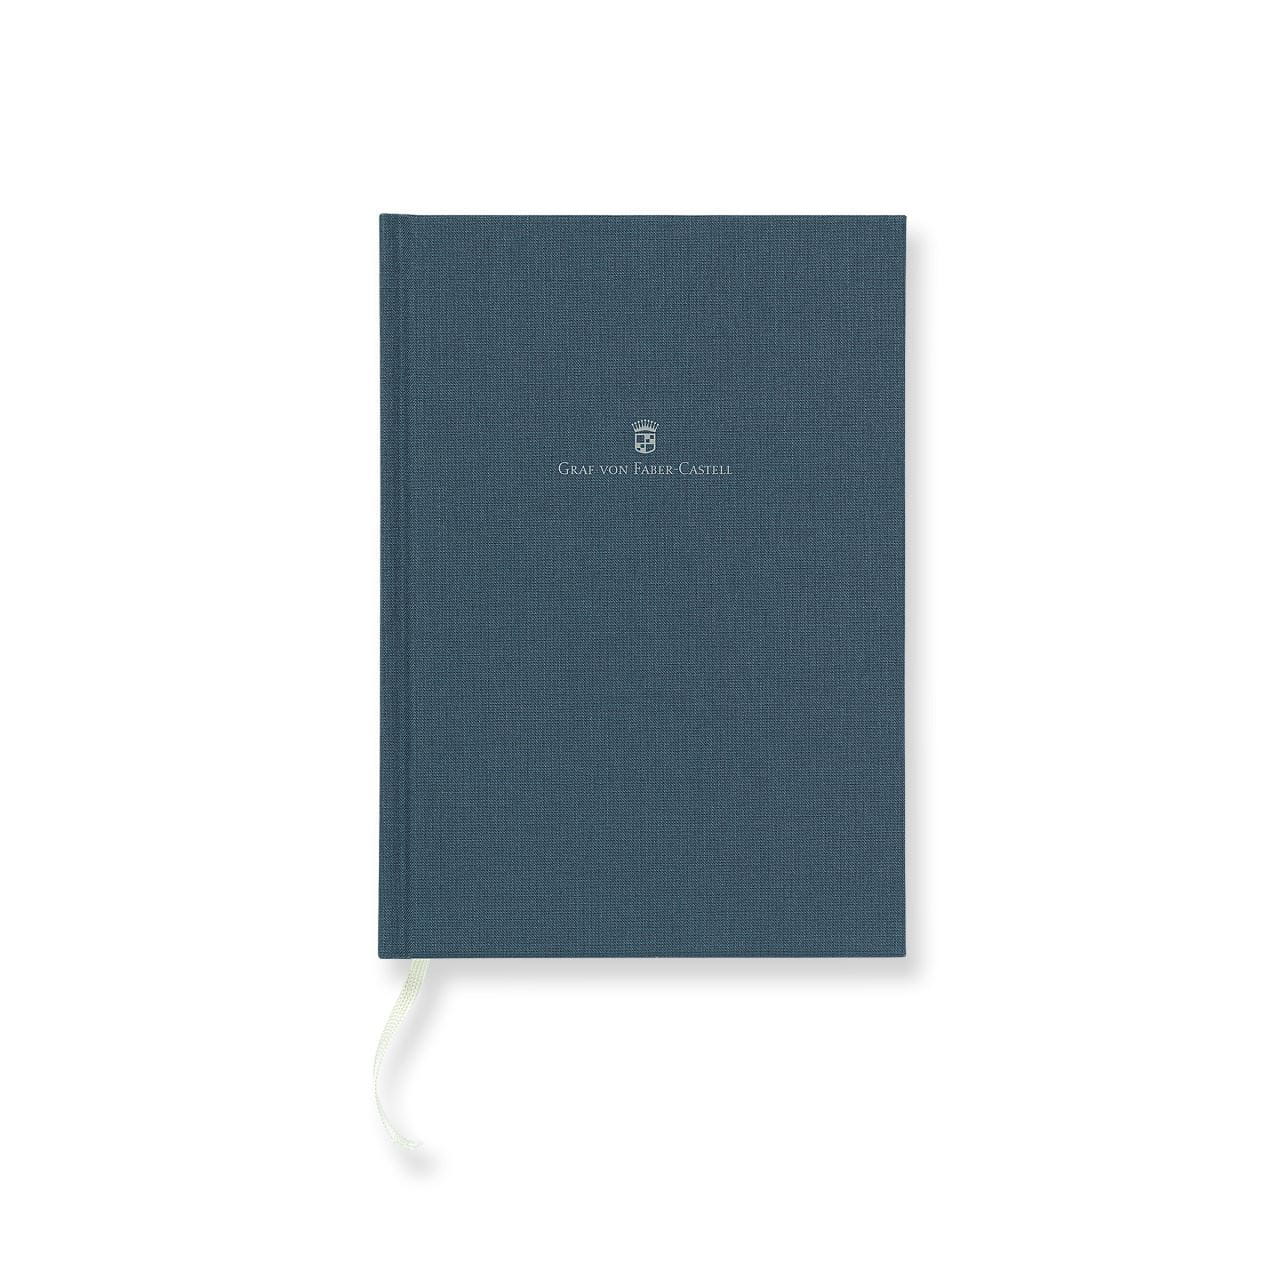 Graf-von-Faber-Castell - Cuaderno con cubierta de lino tamaño A5 azul